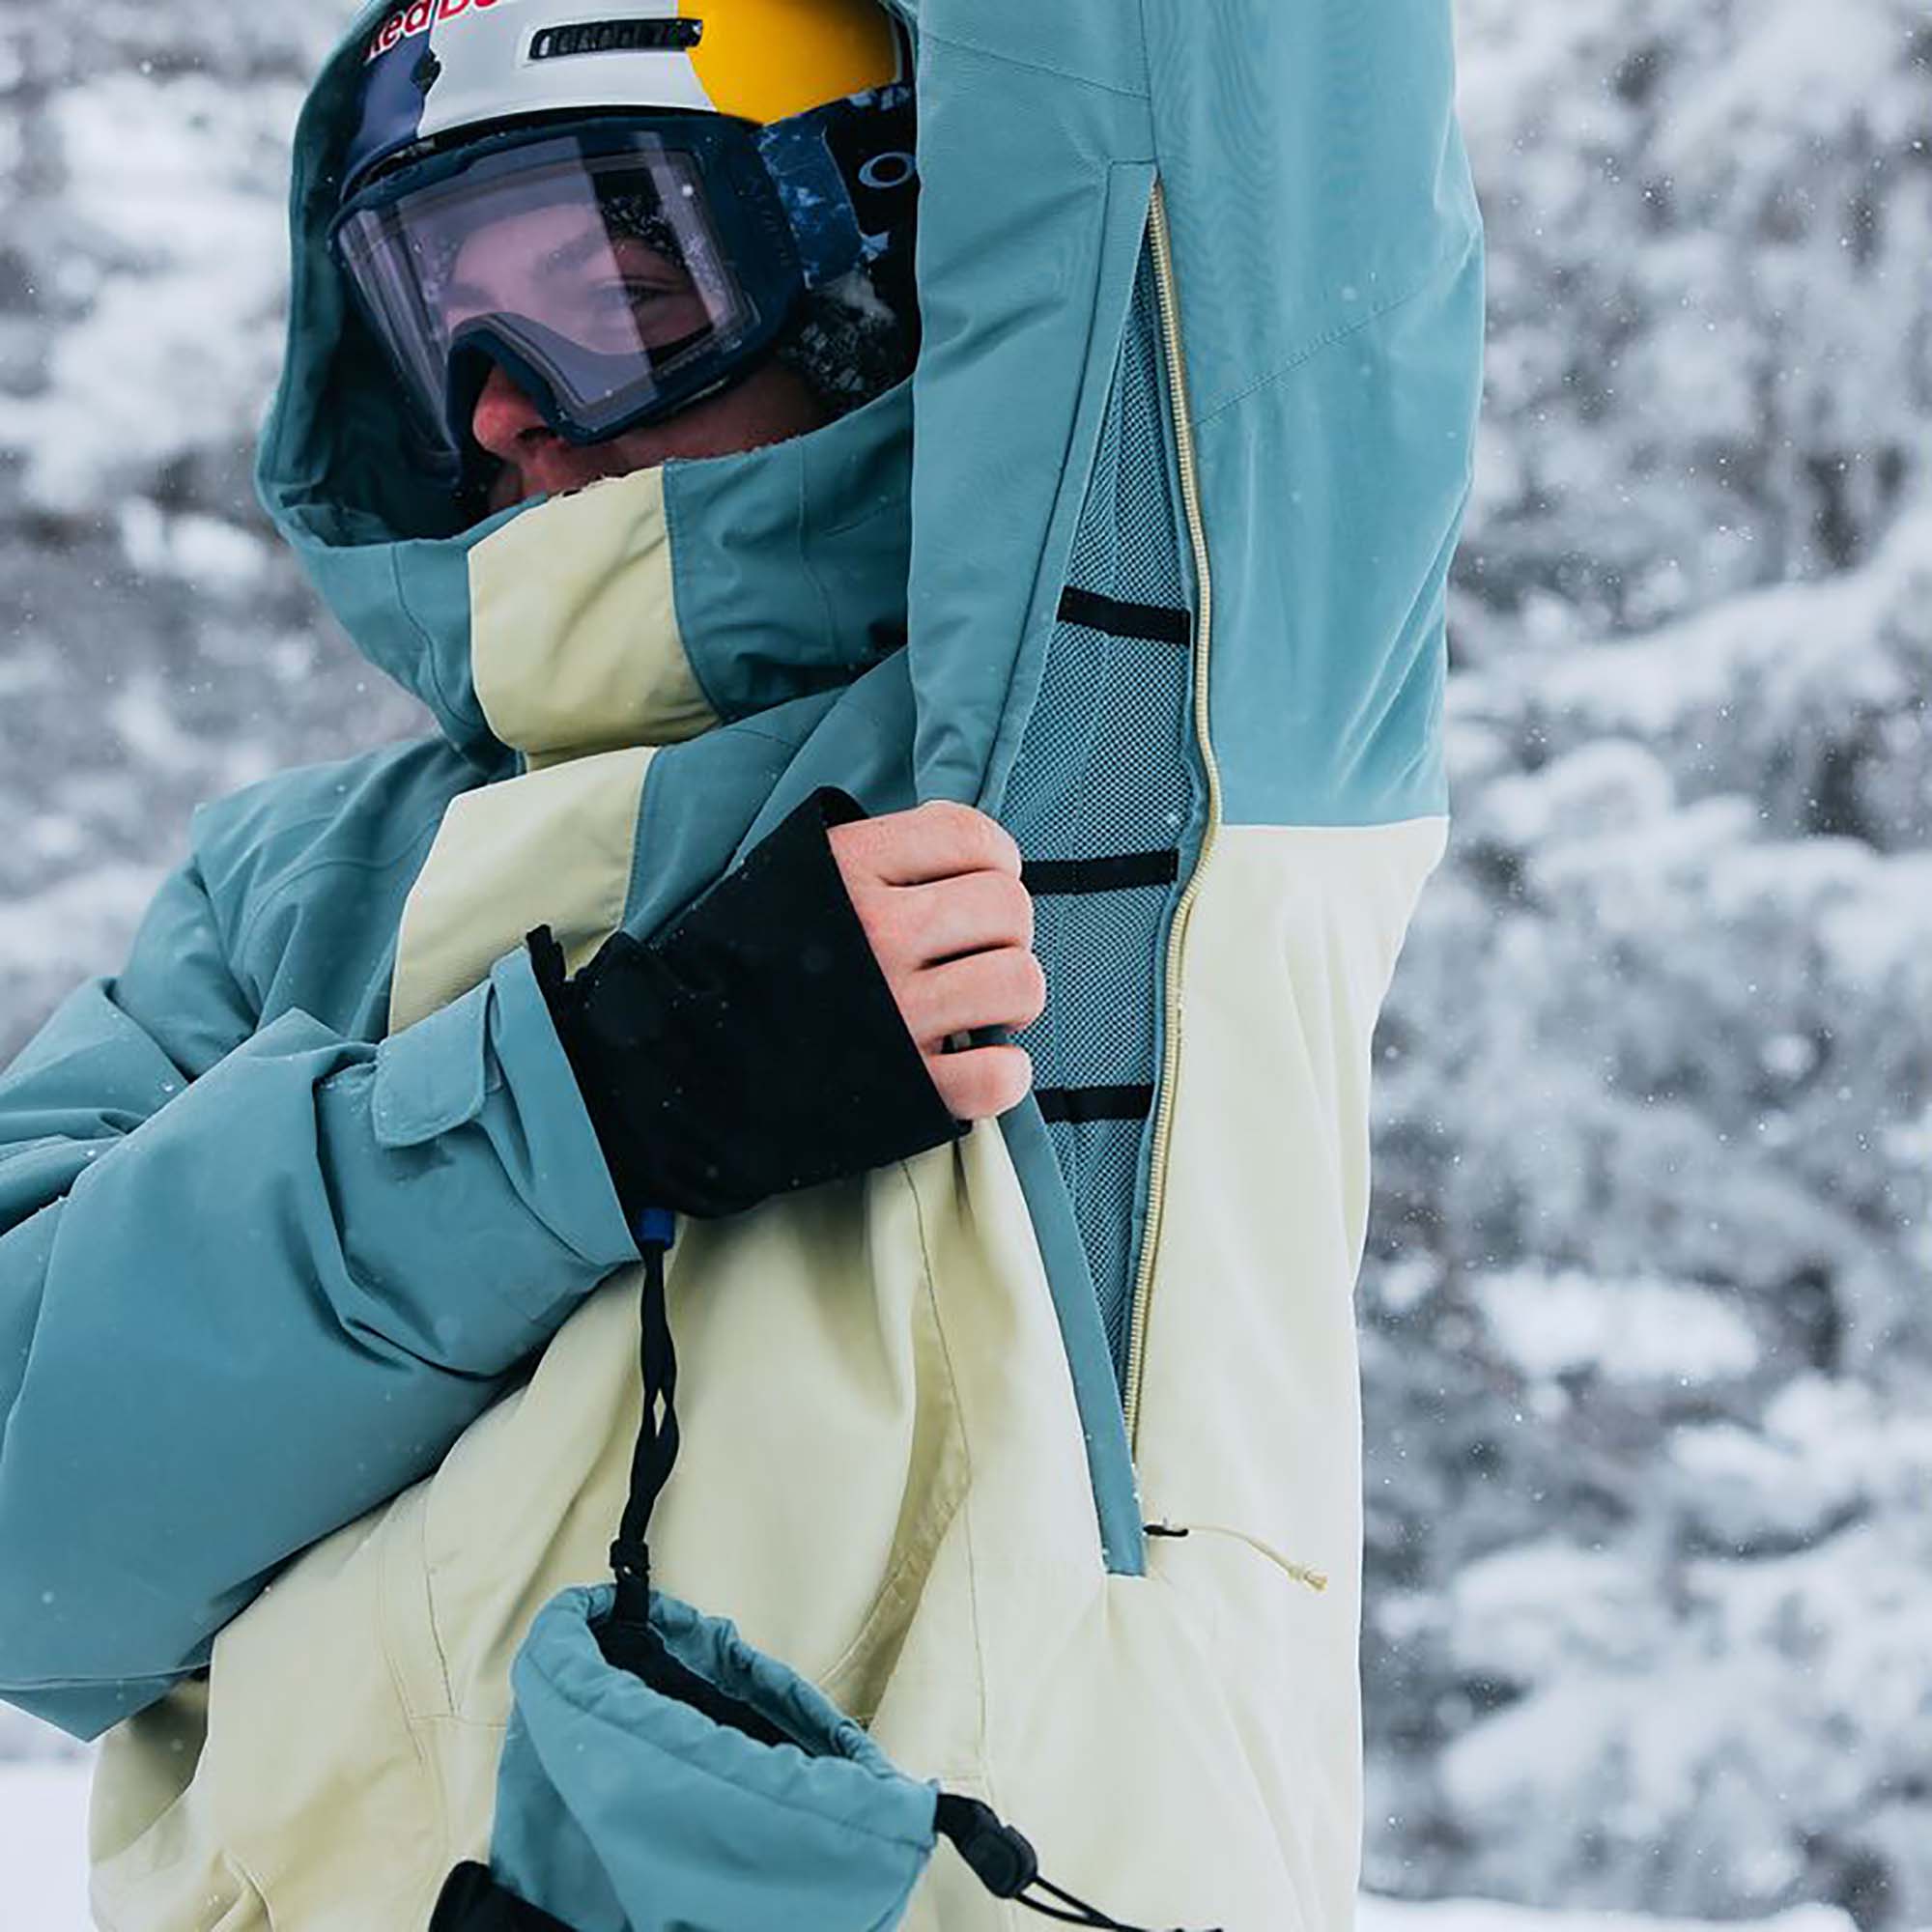 Burton Covert 2.0 Ski/Snowboard Jacket